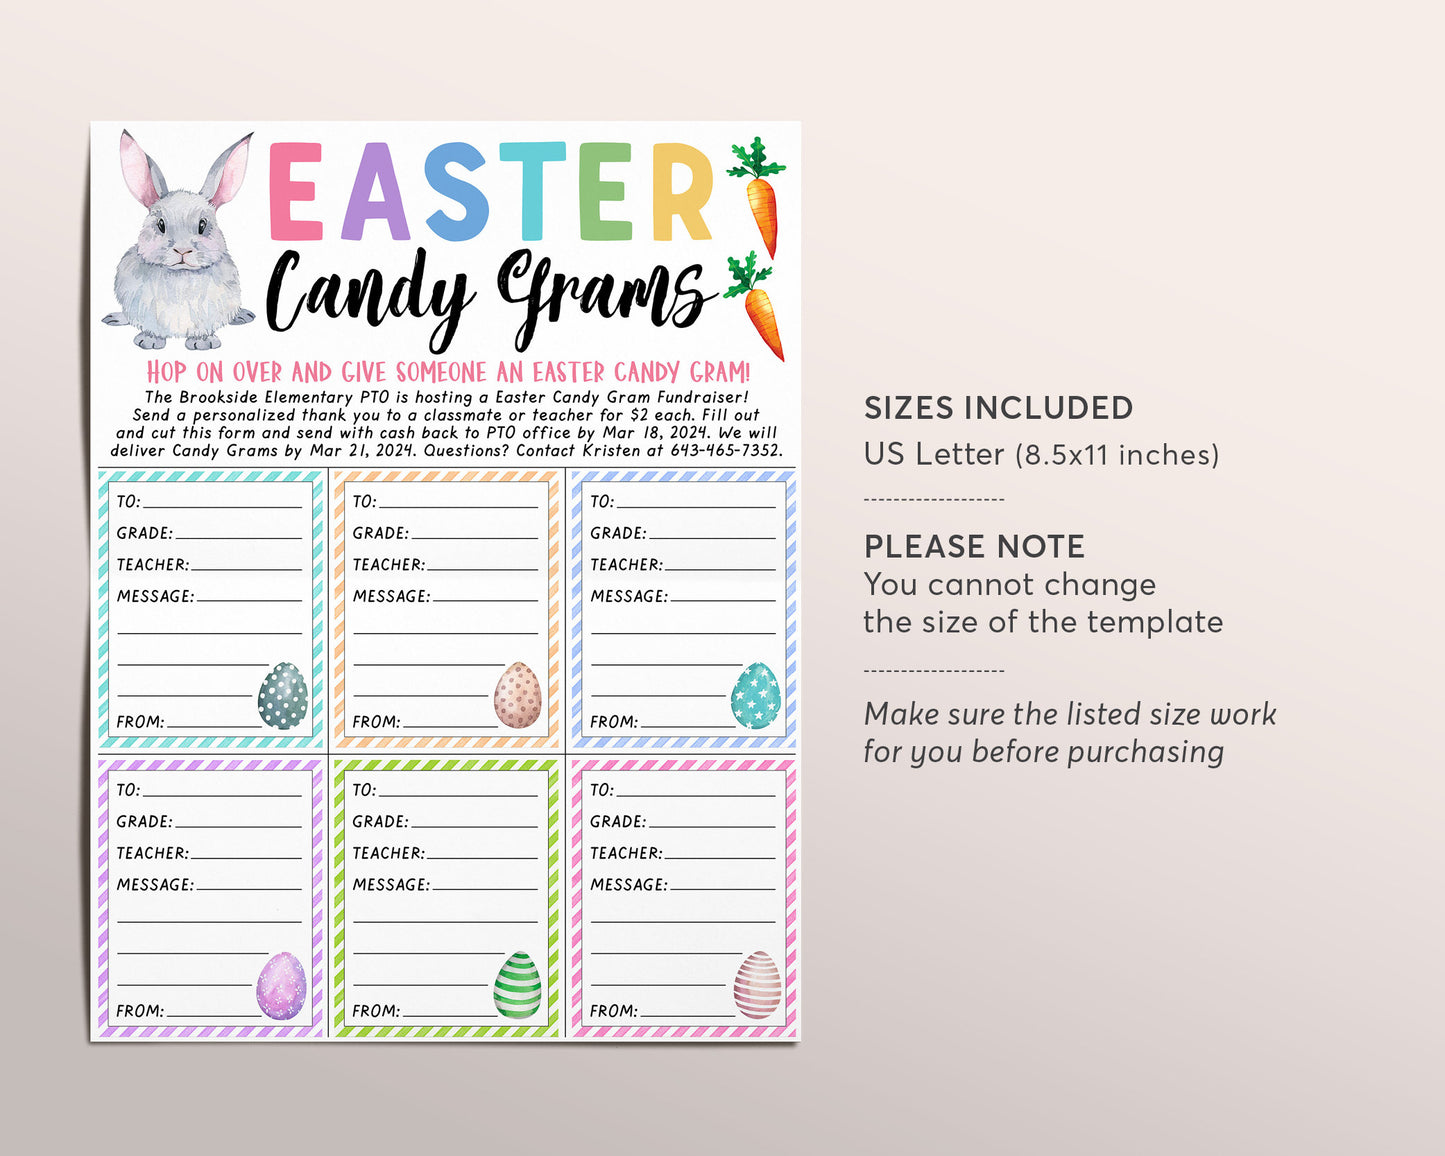 Easter Candy Gram Flyer Editable Template, Easter Bunny Candy Grams Fundraiser Event for kids, Egg Gram PTA PTO School Nonprofit Church